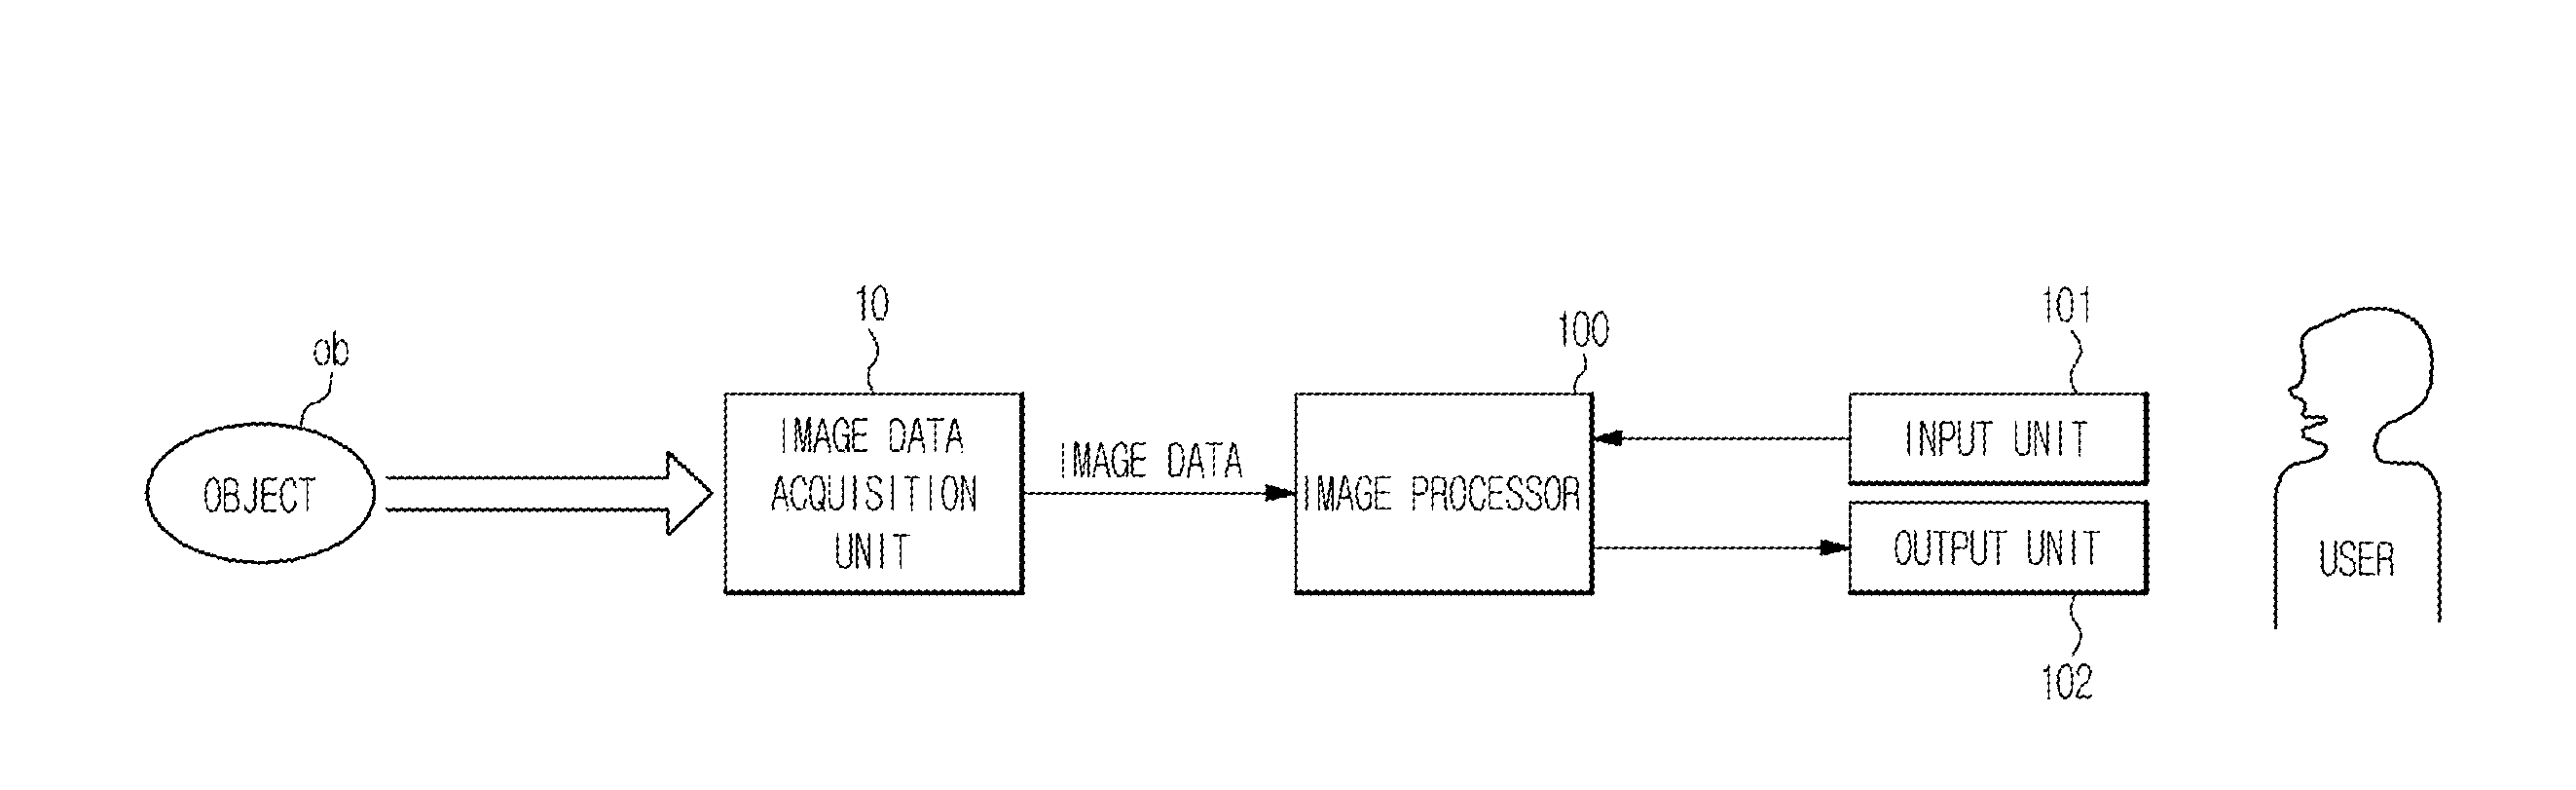 Imaging apparatus, ultrasonic imaging apparatus, method of processing an image, and method of processing an ultrasonic image